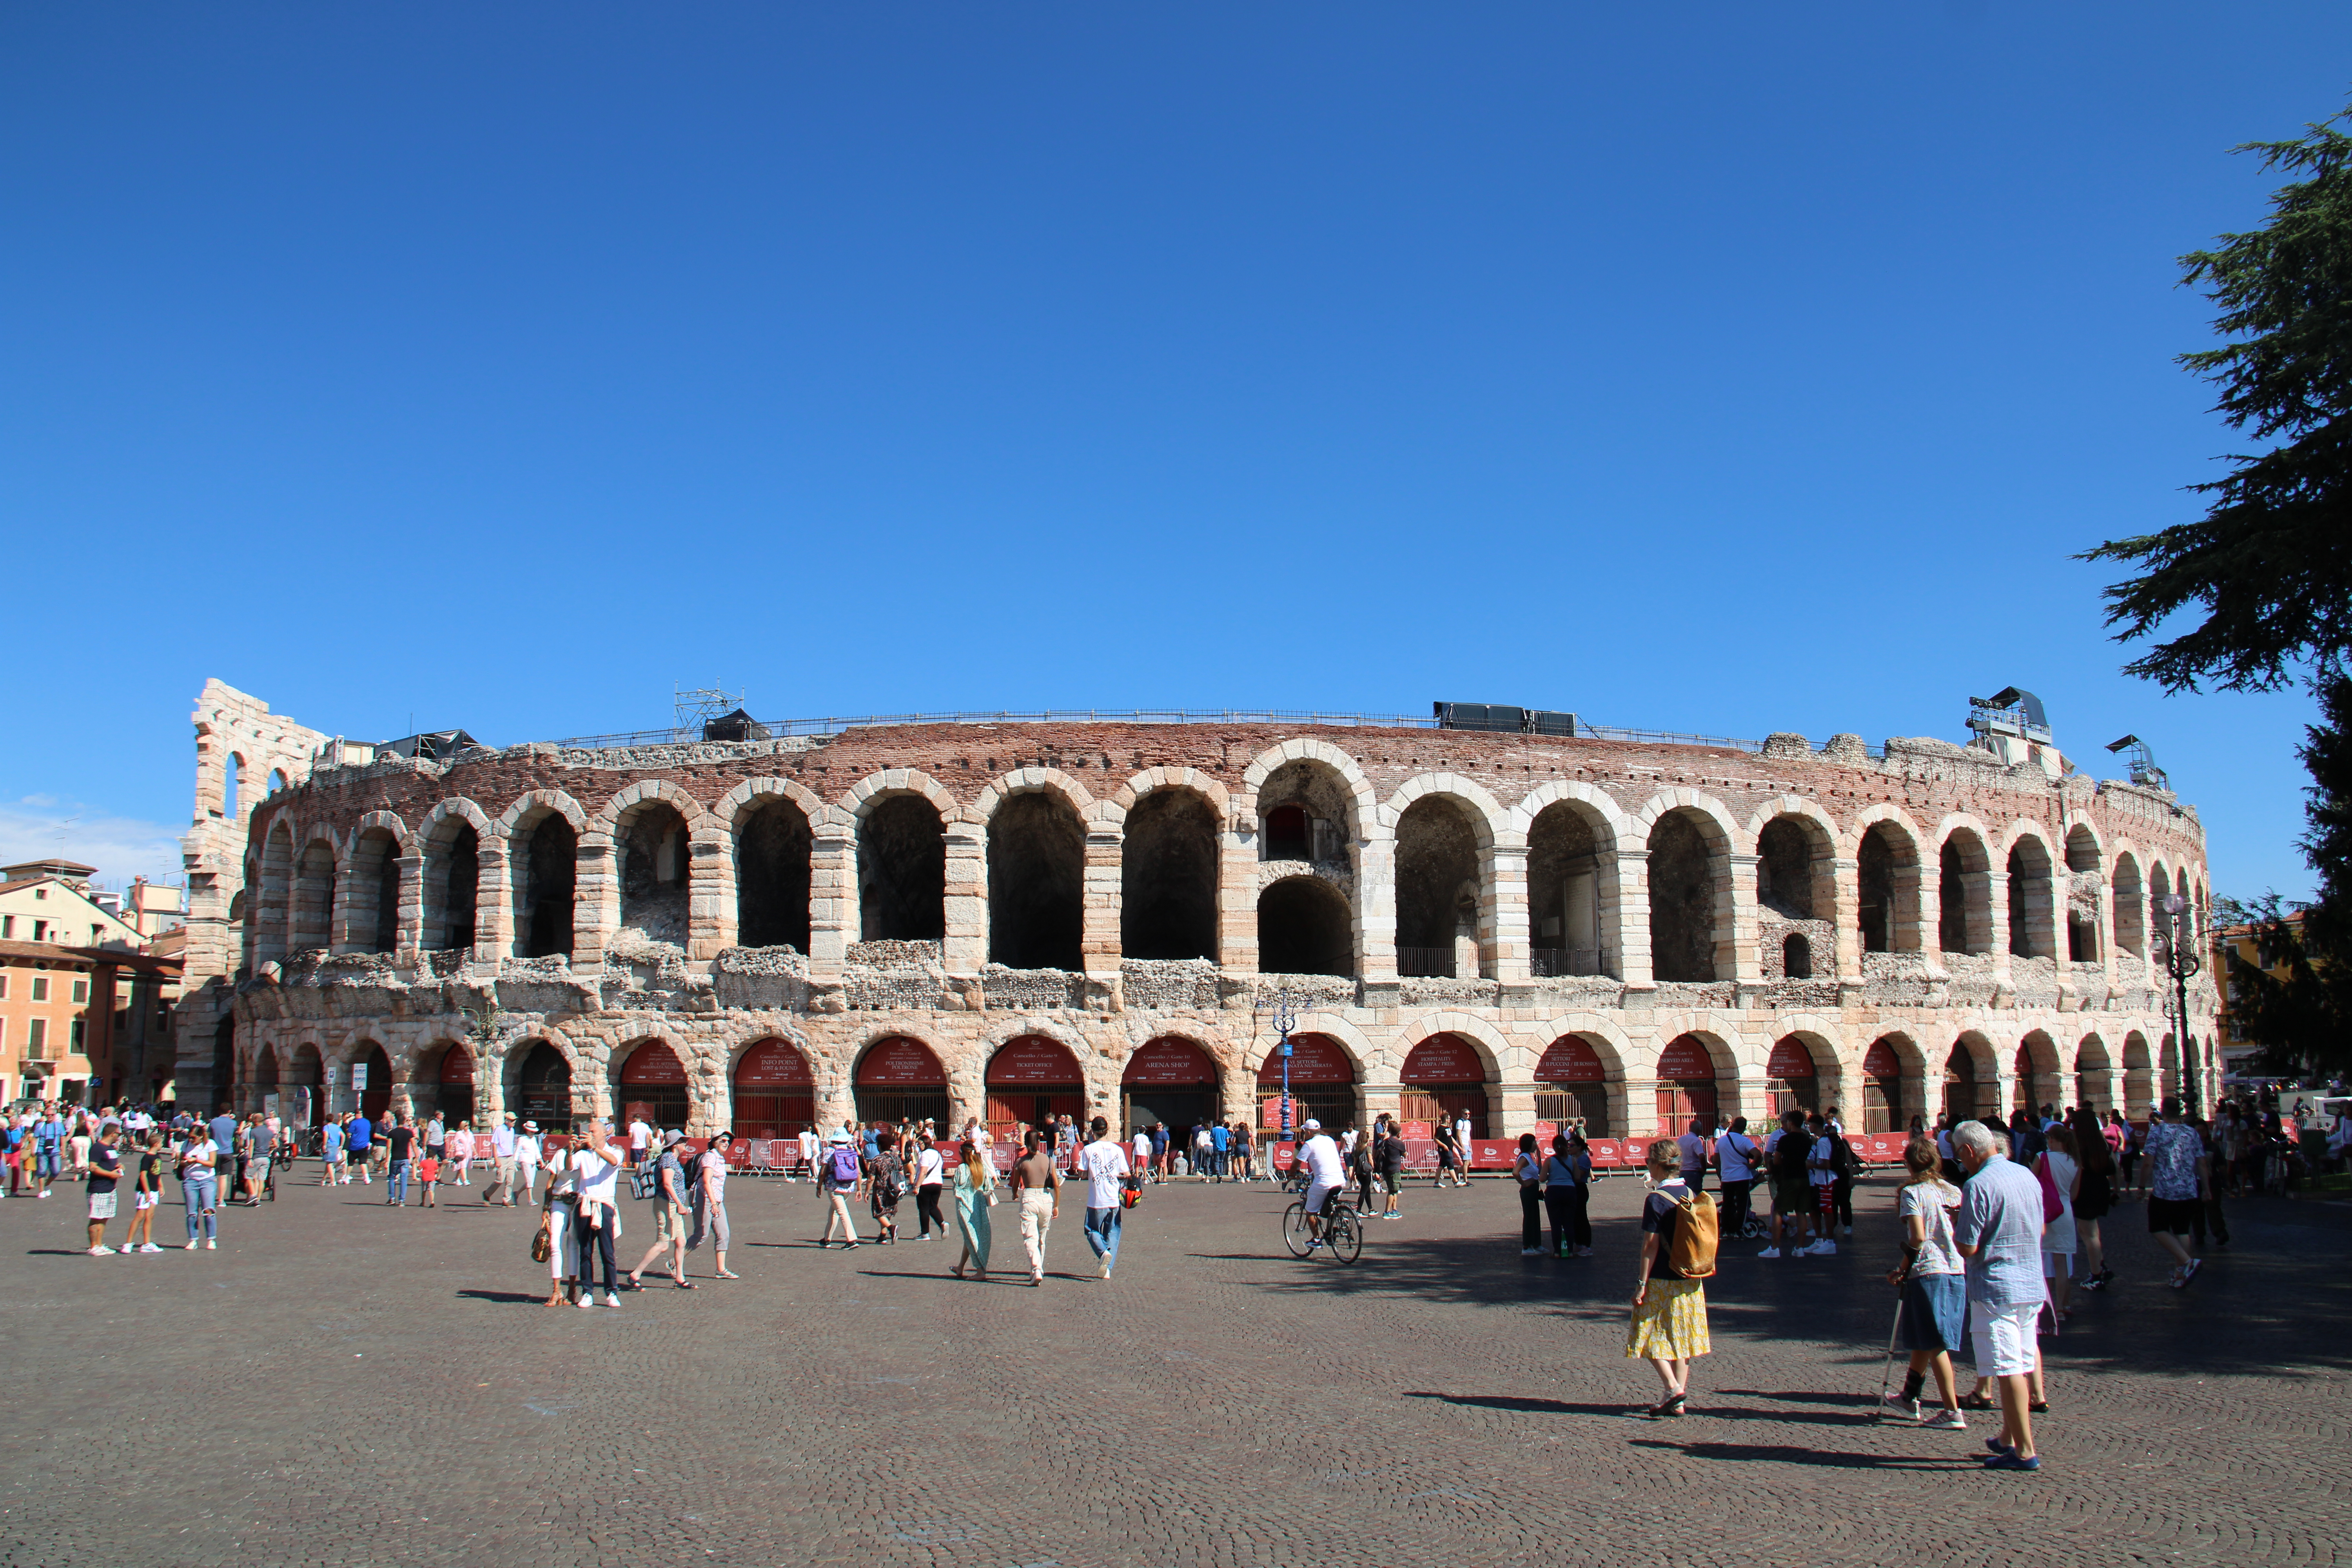 File:Arena di Verona 02.jpg - Wikimedia Commons